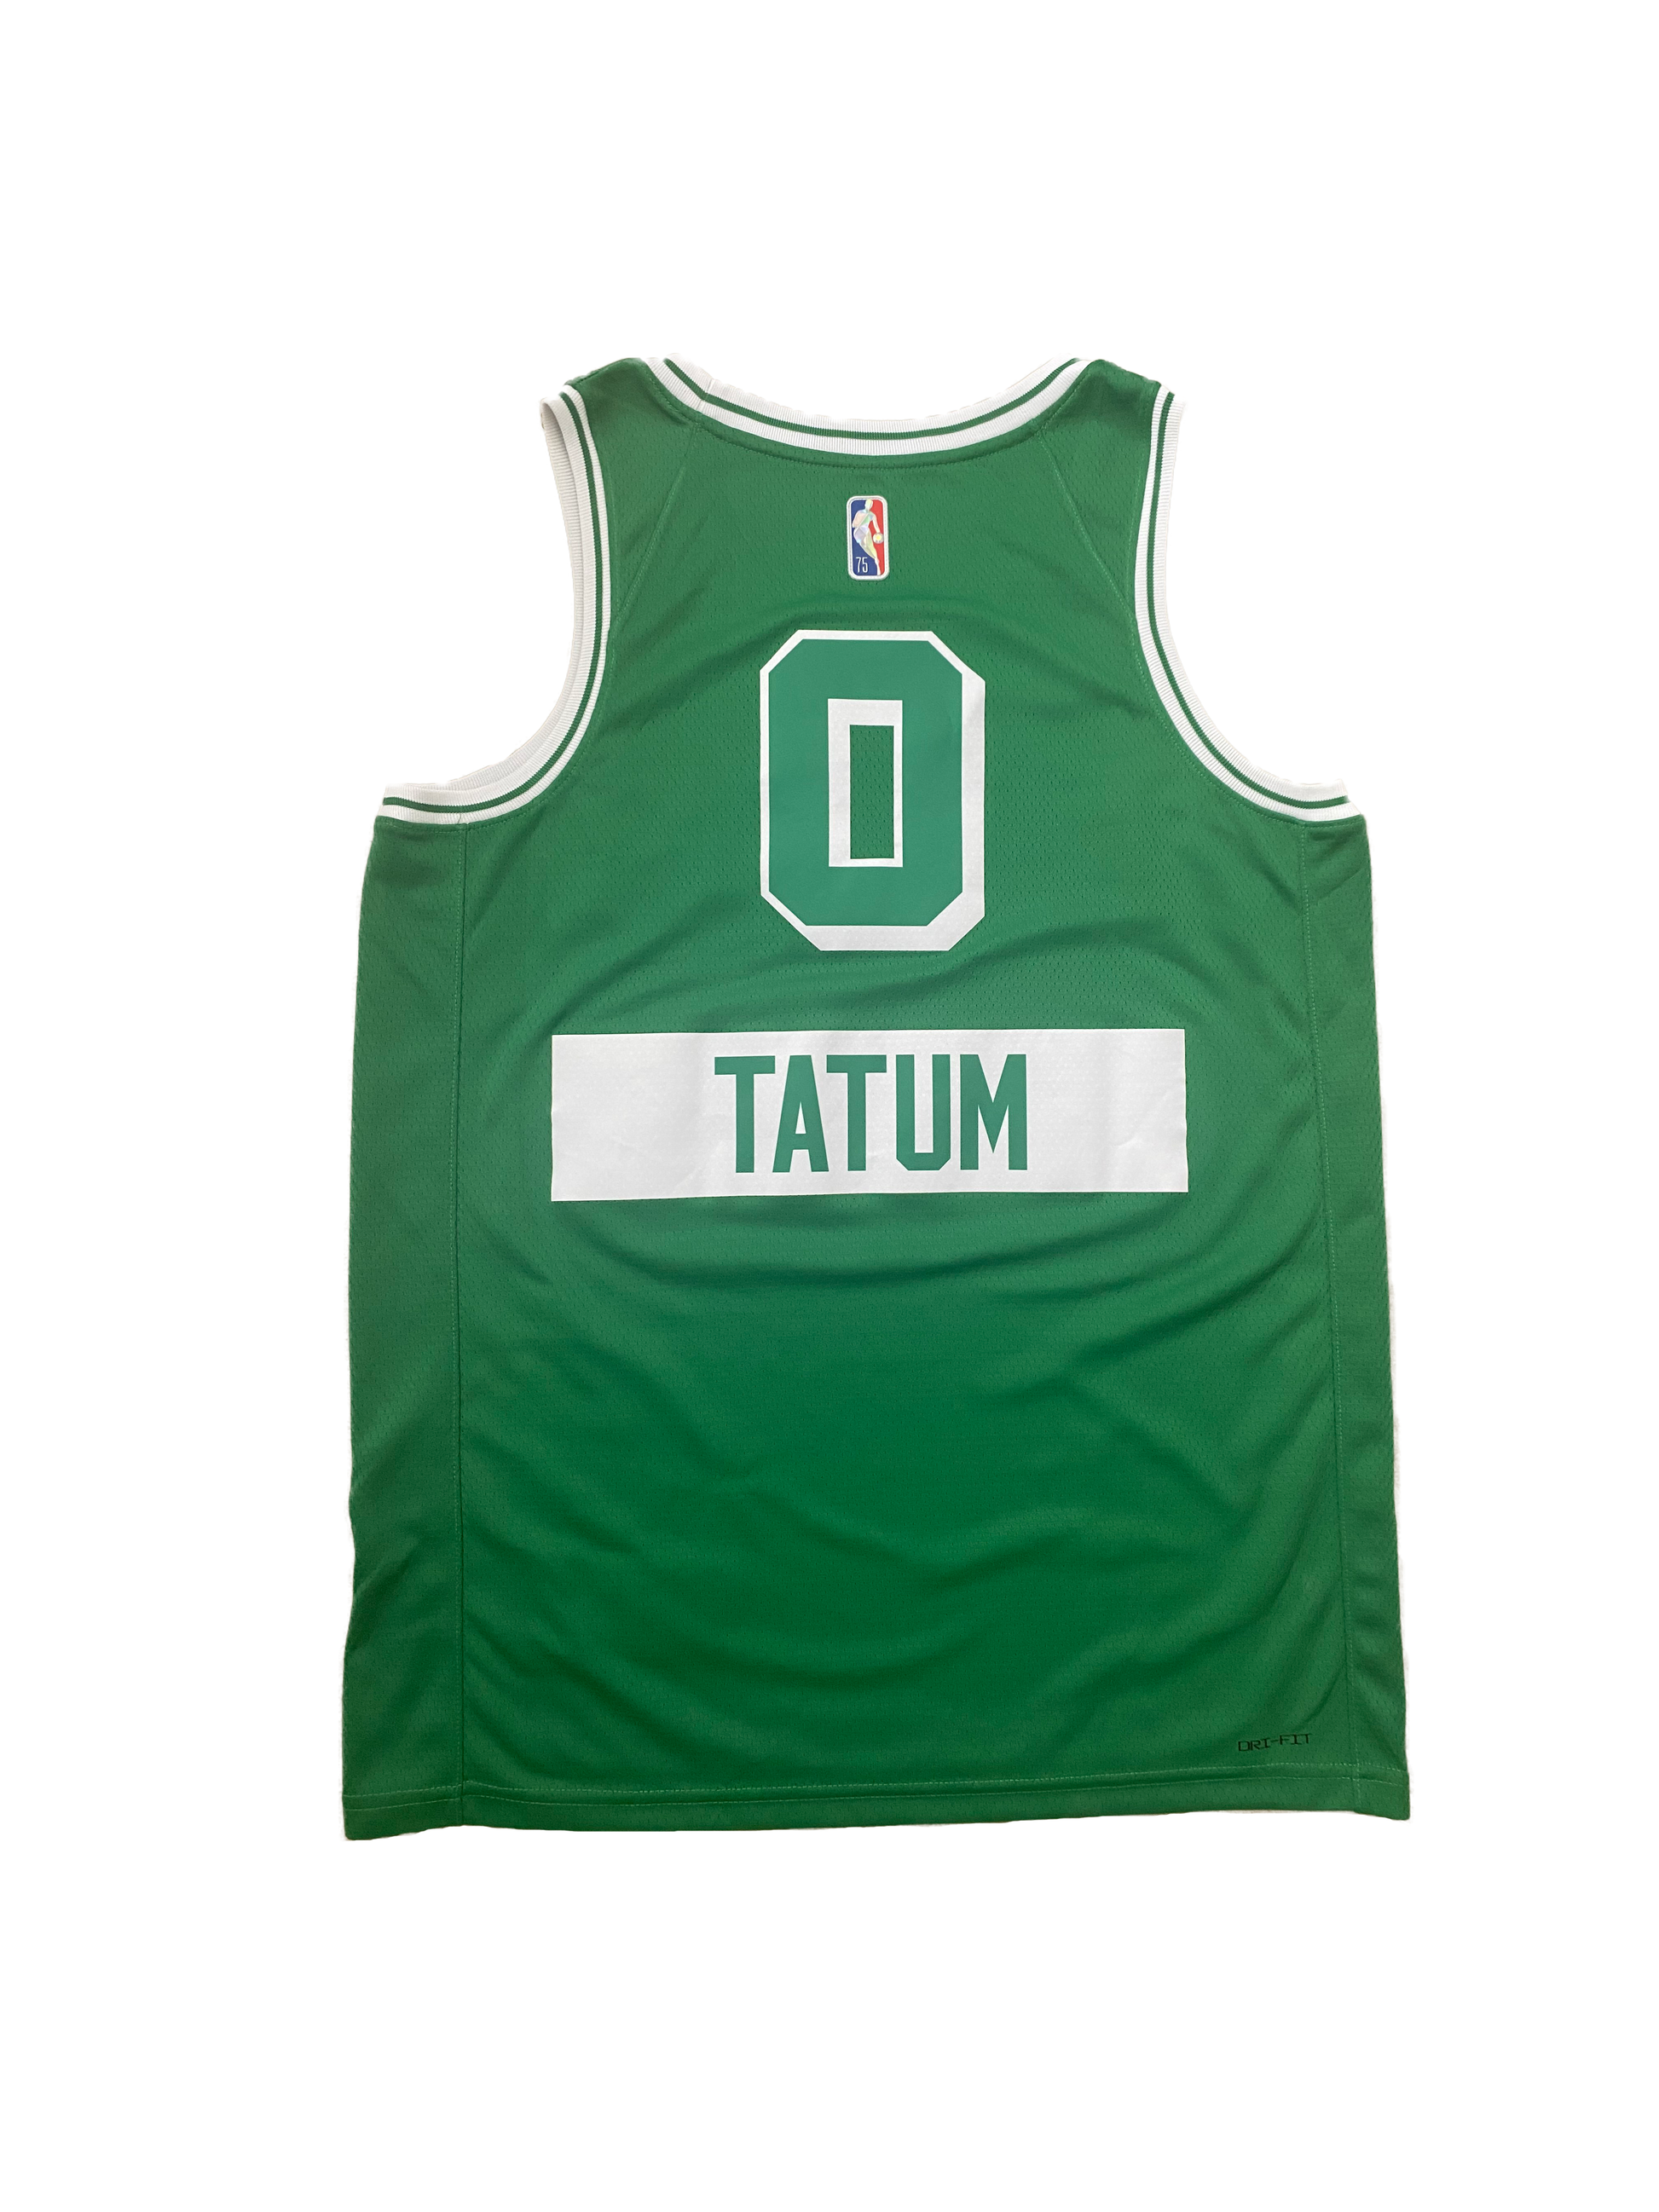 Tatum City Edition Jersey 21-22 – TheJerseySafe